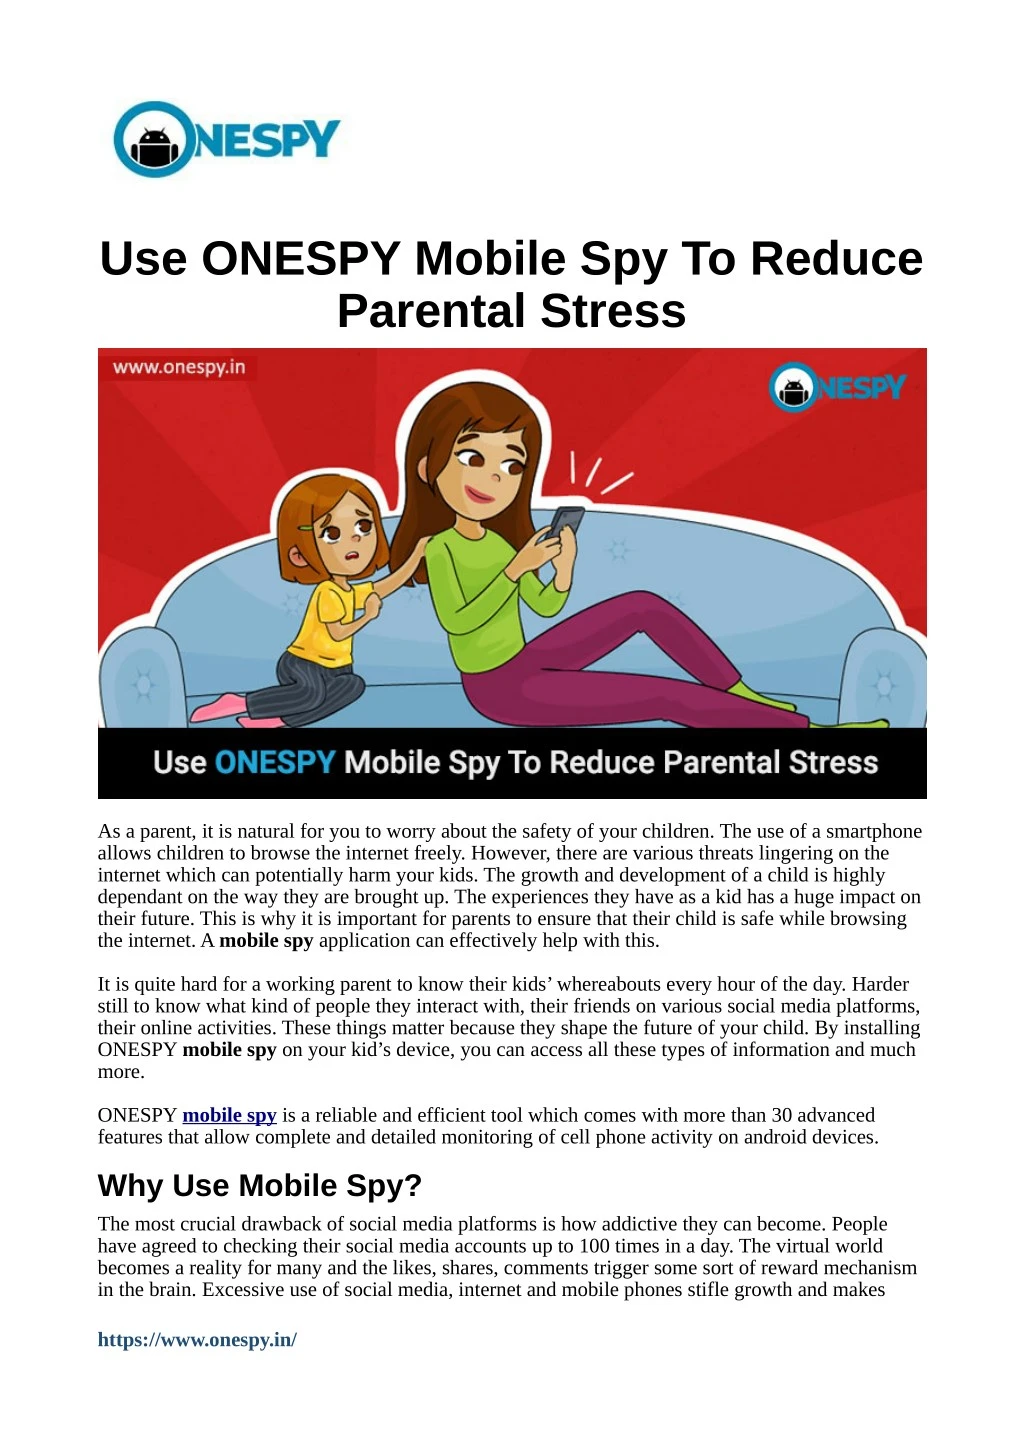 use onespy mobile spy to reduce parental stress